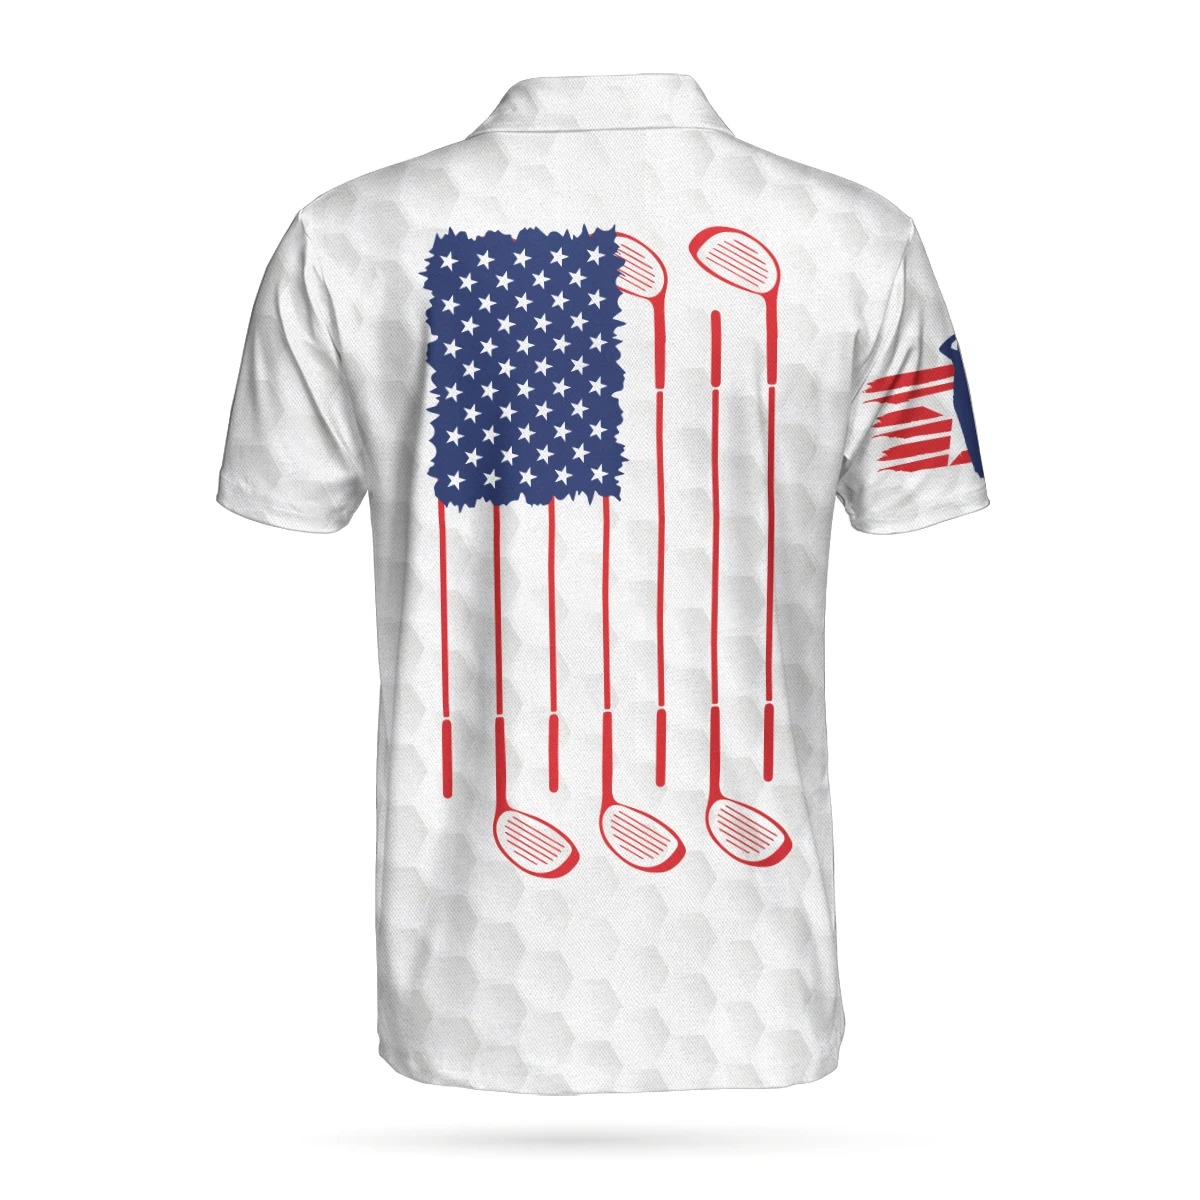 Golf American flag polo shirt3 1